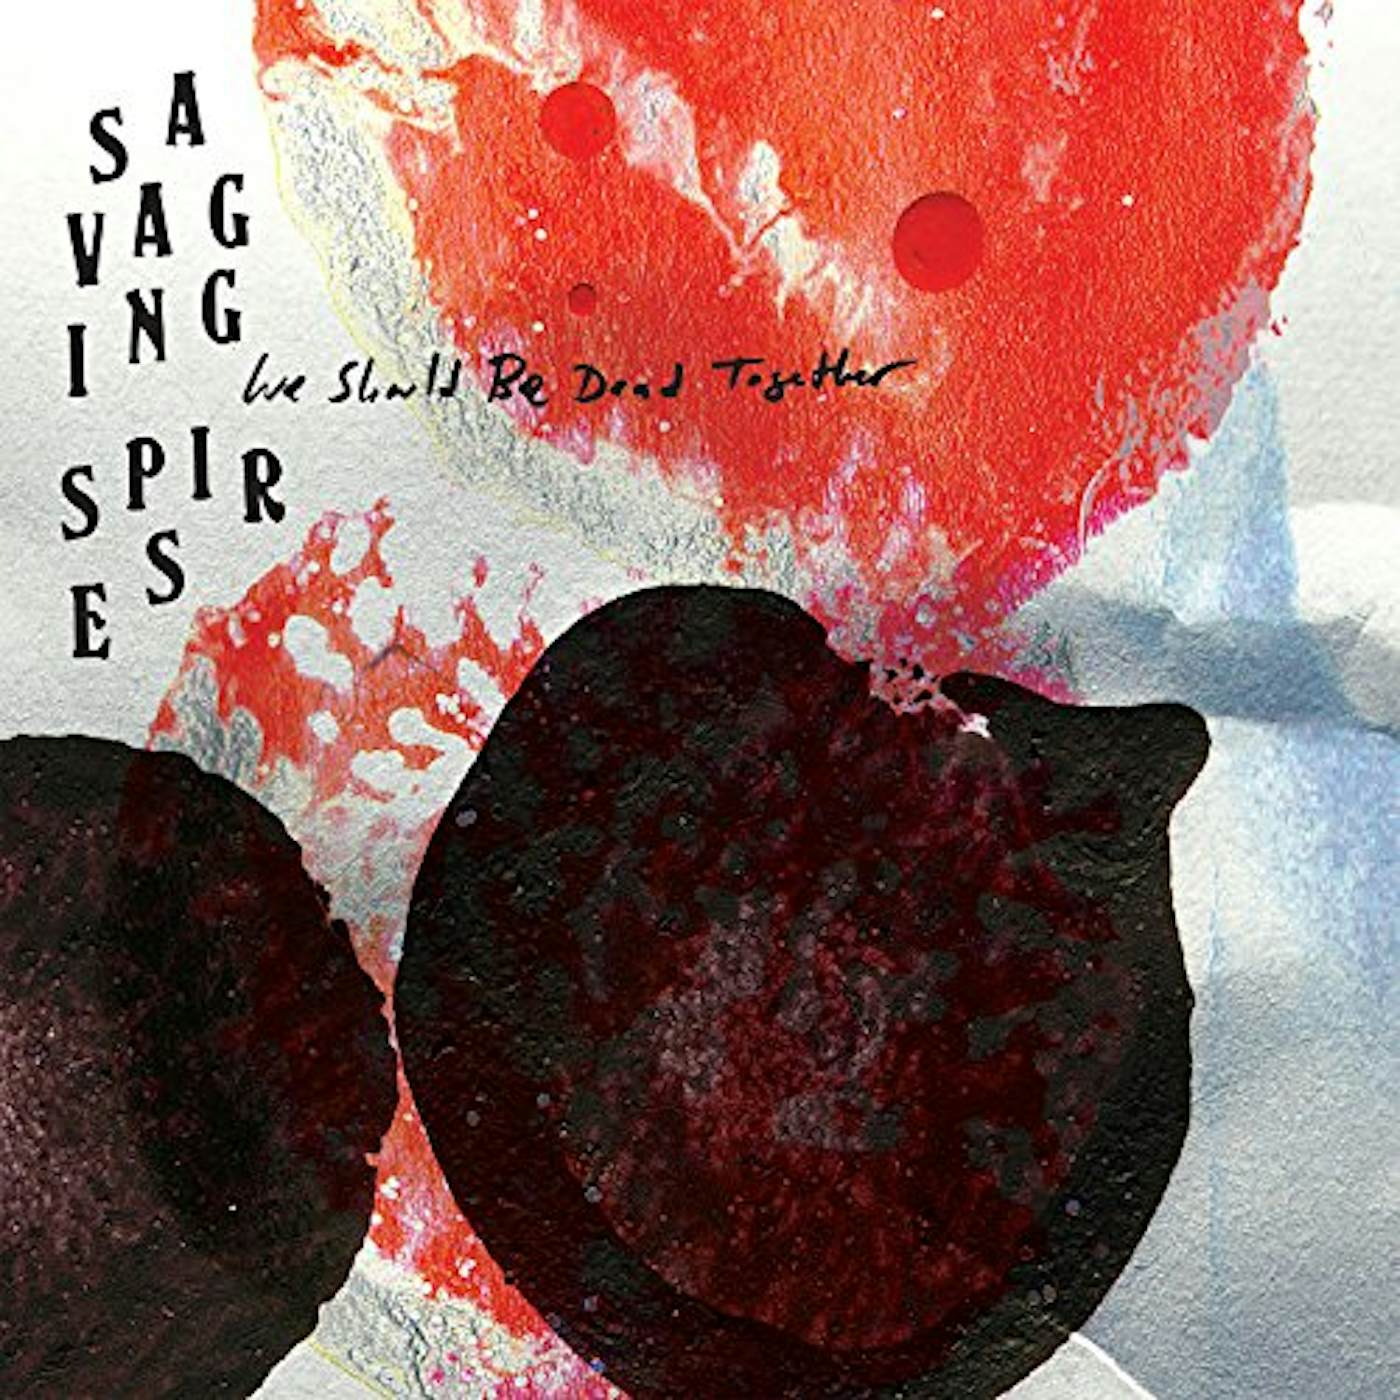 Savaging Spires We Should Be Dead Together Vinyl Record